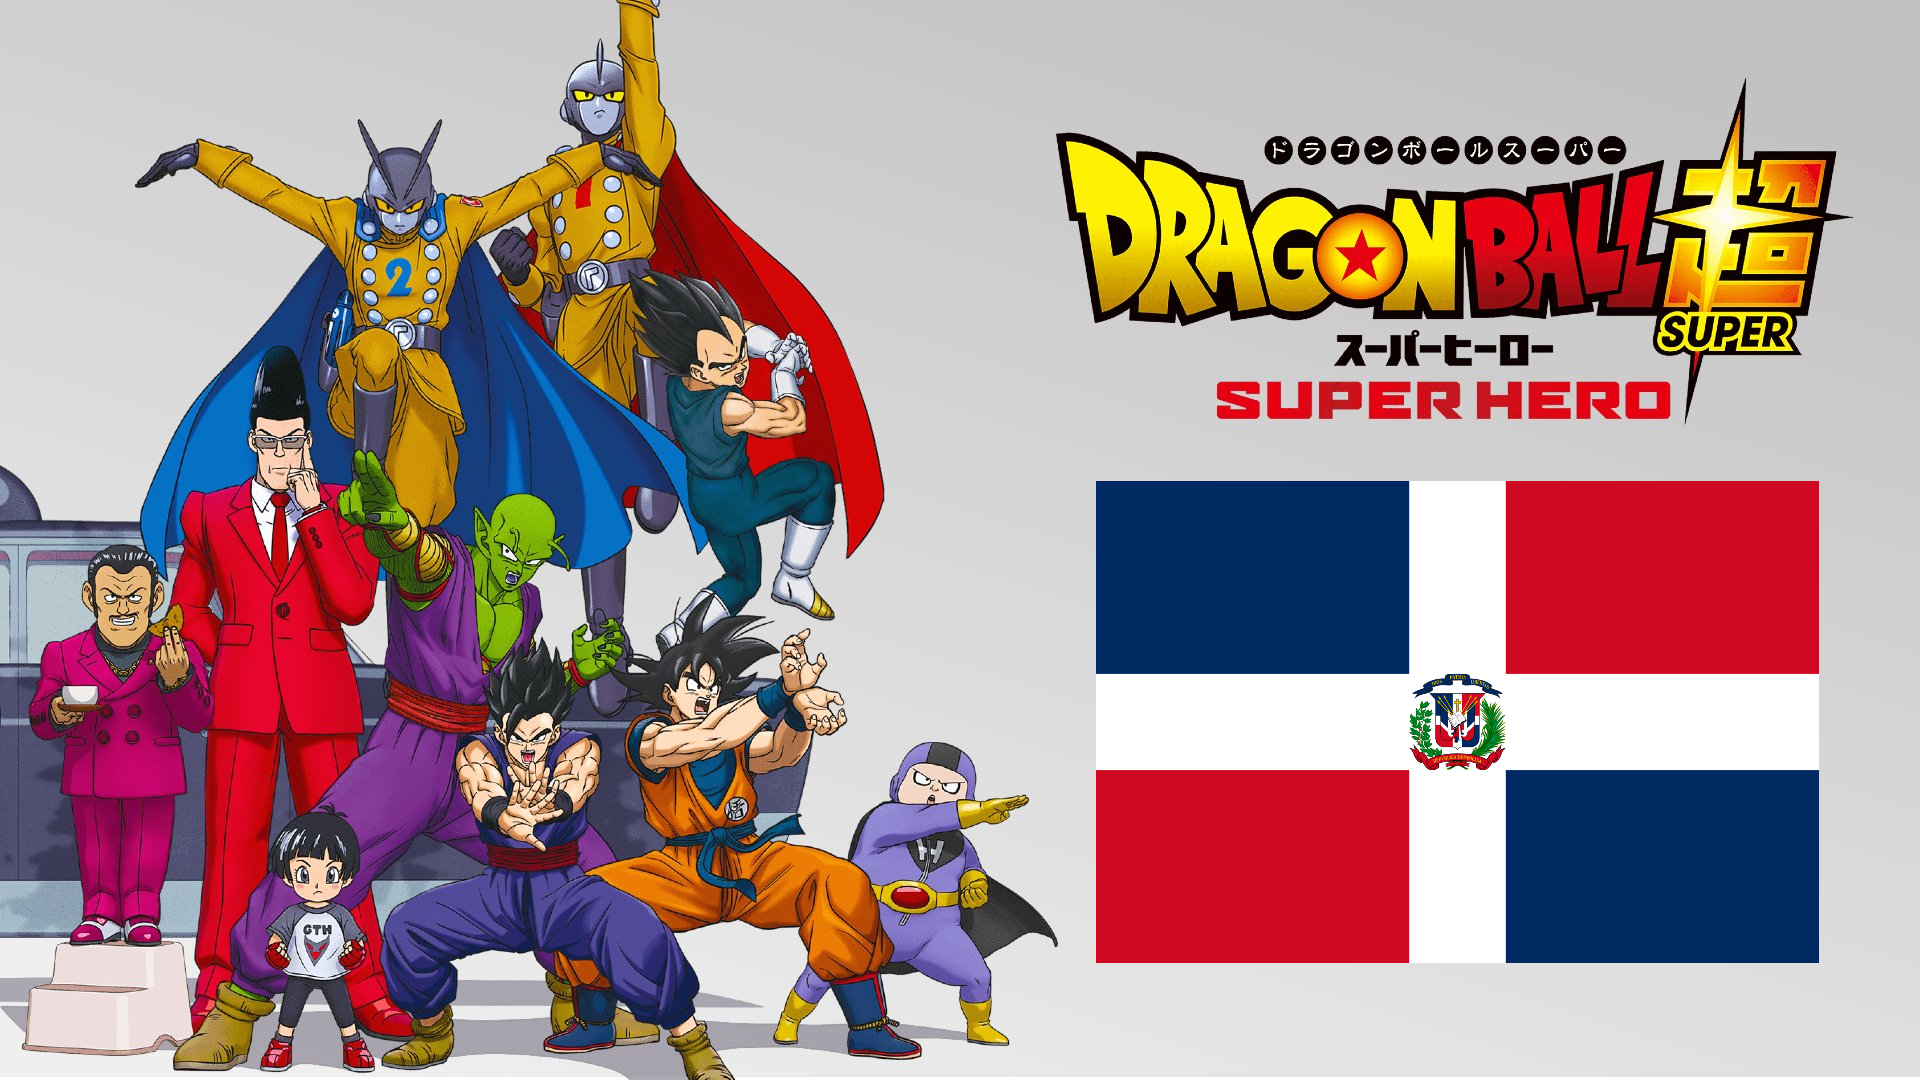 Dragon Ball Super: Super Hero, esta será la fecha de estreno en